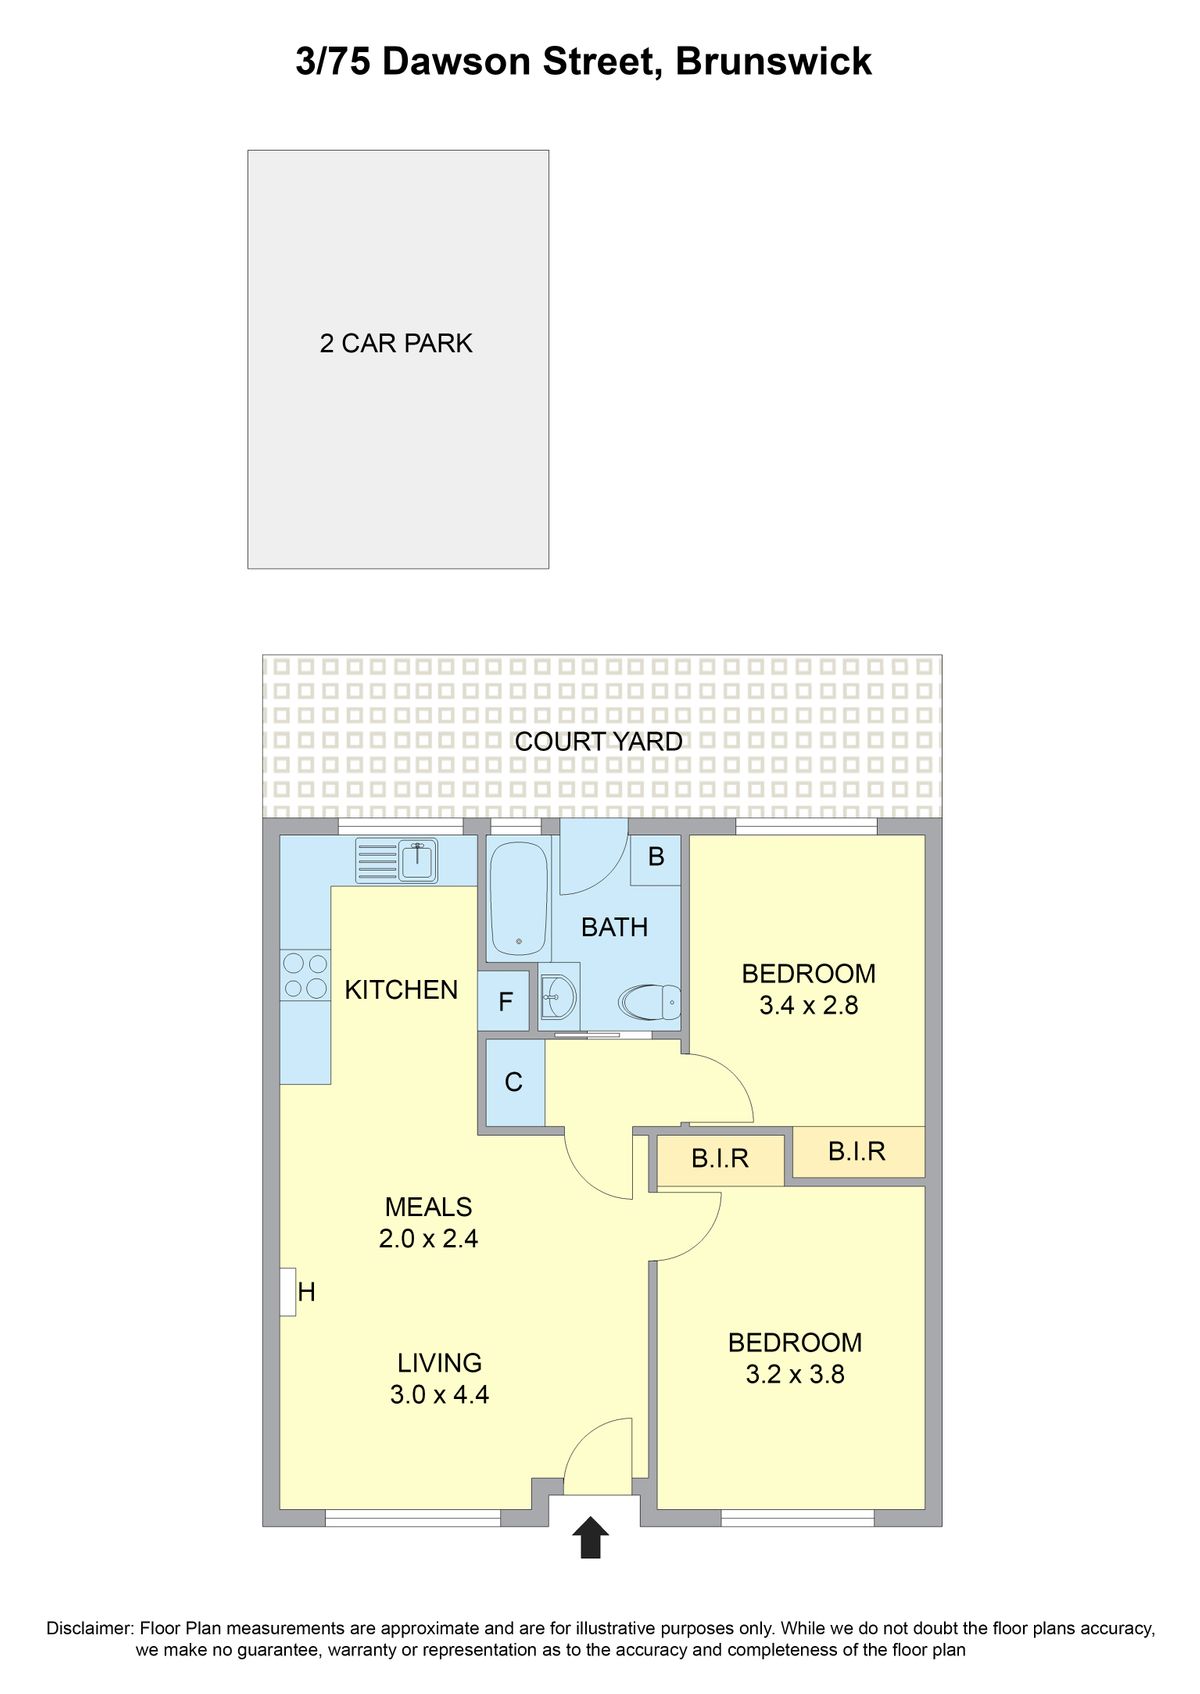 Floor Plan   3 75 Dawson st, Brunswick 2D